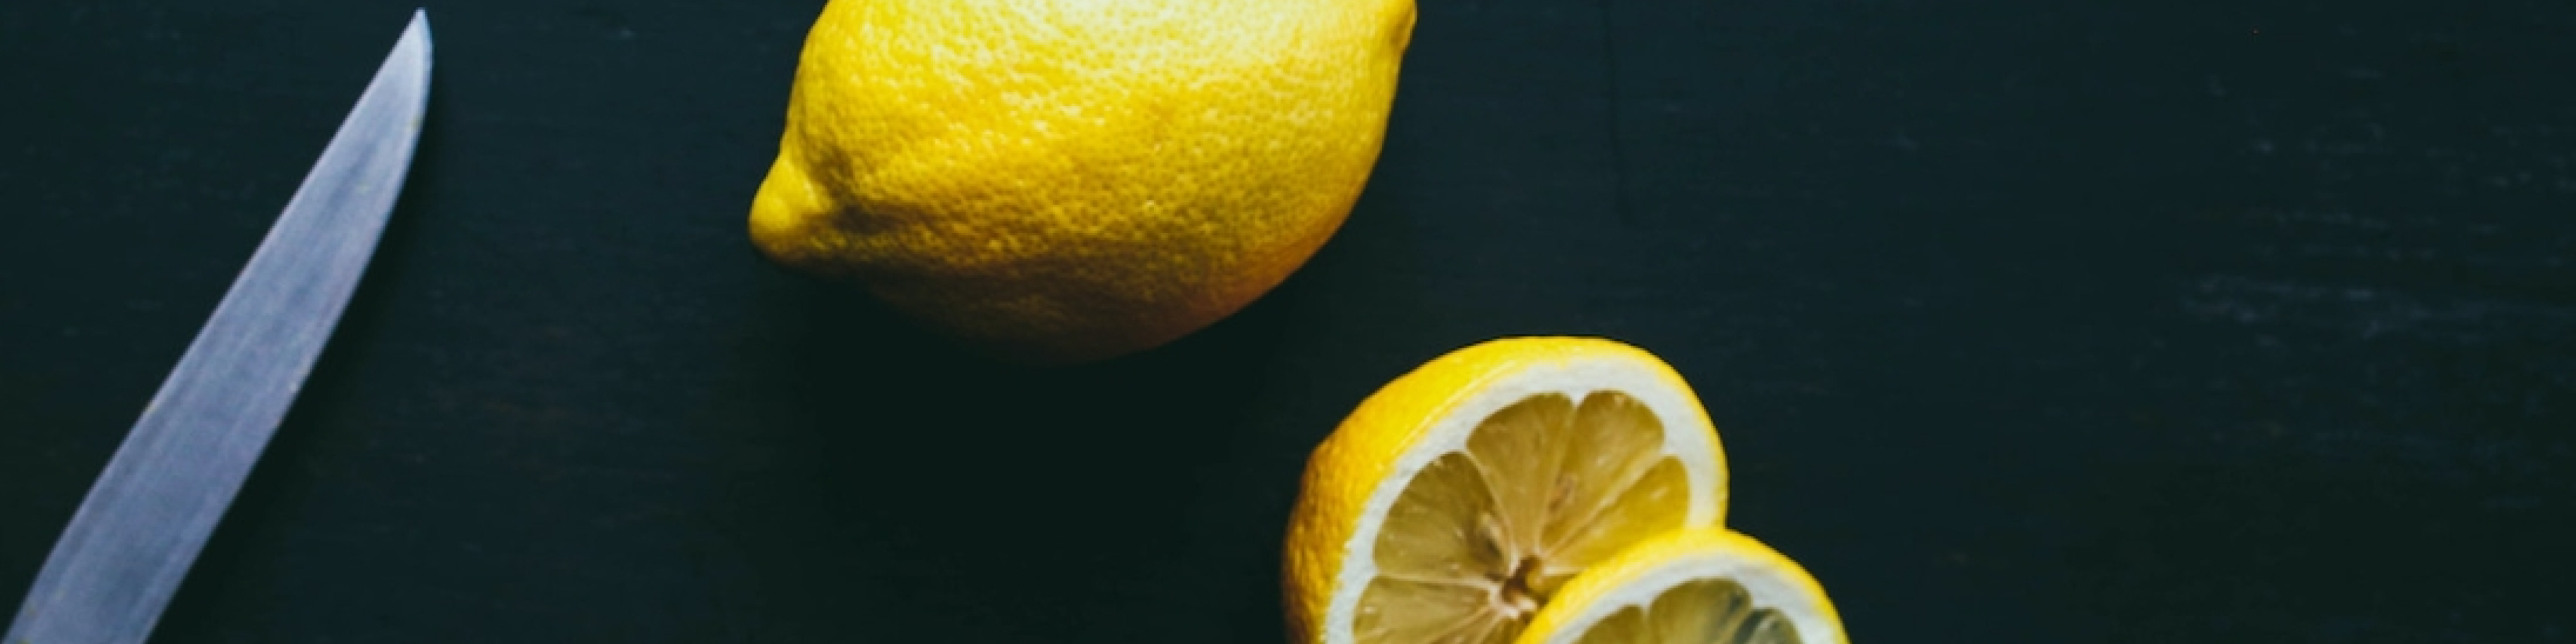 Lemons on a cutting board.